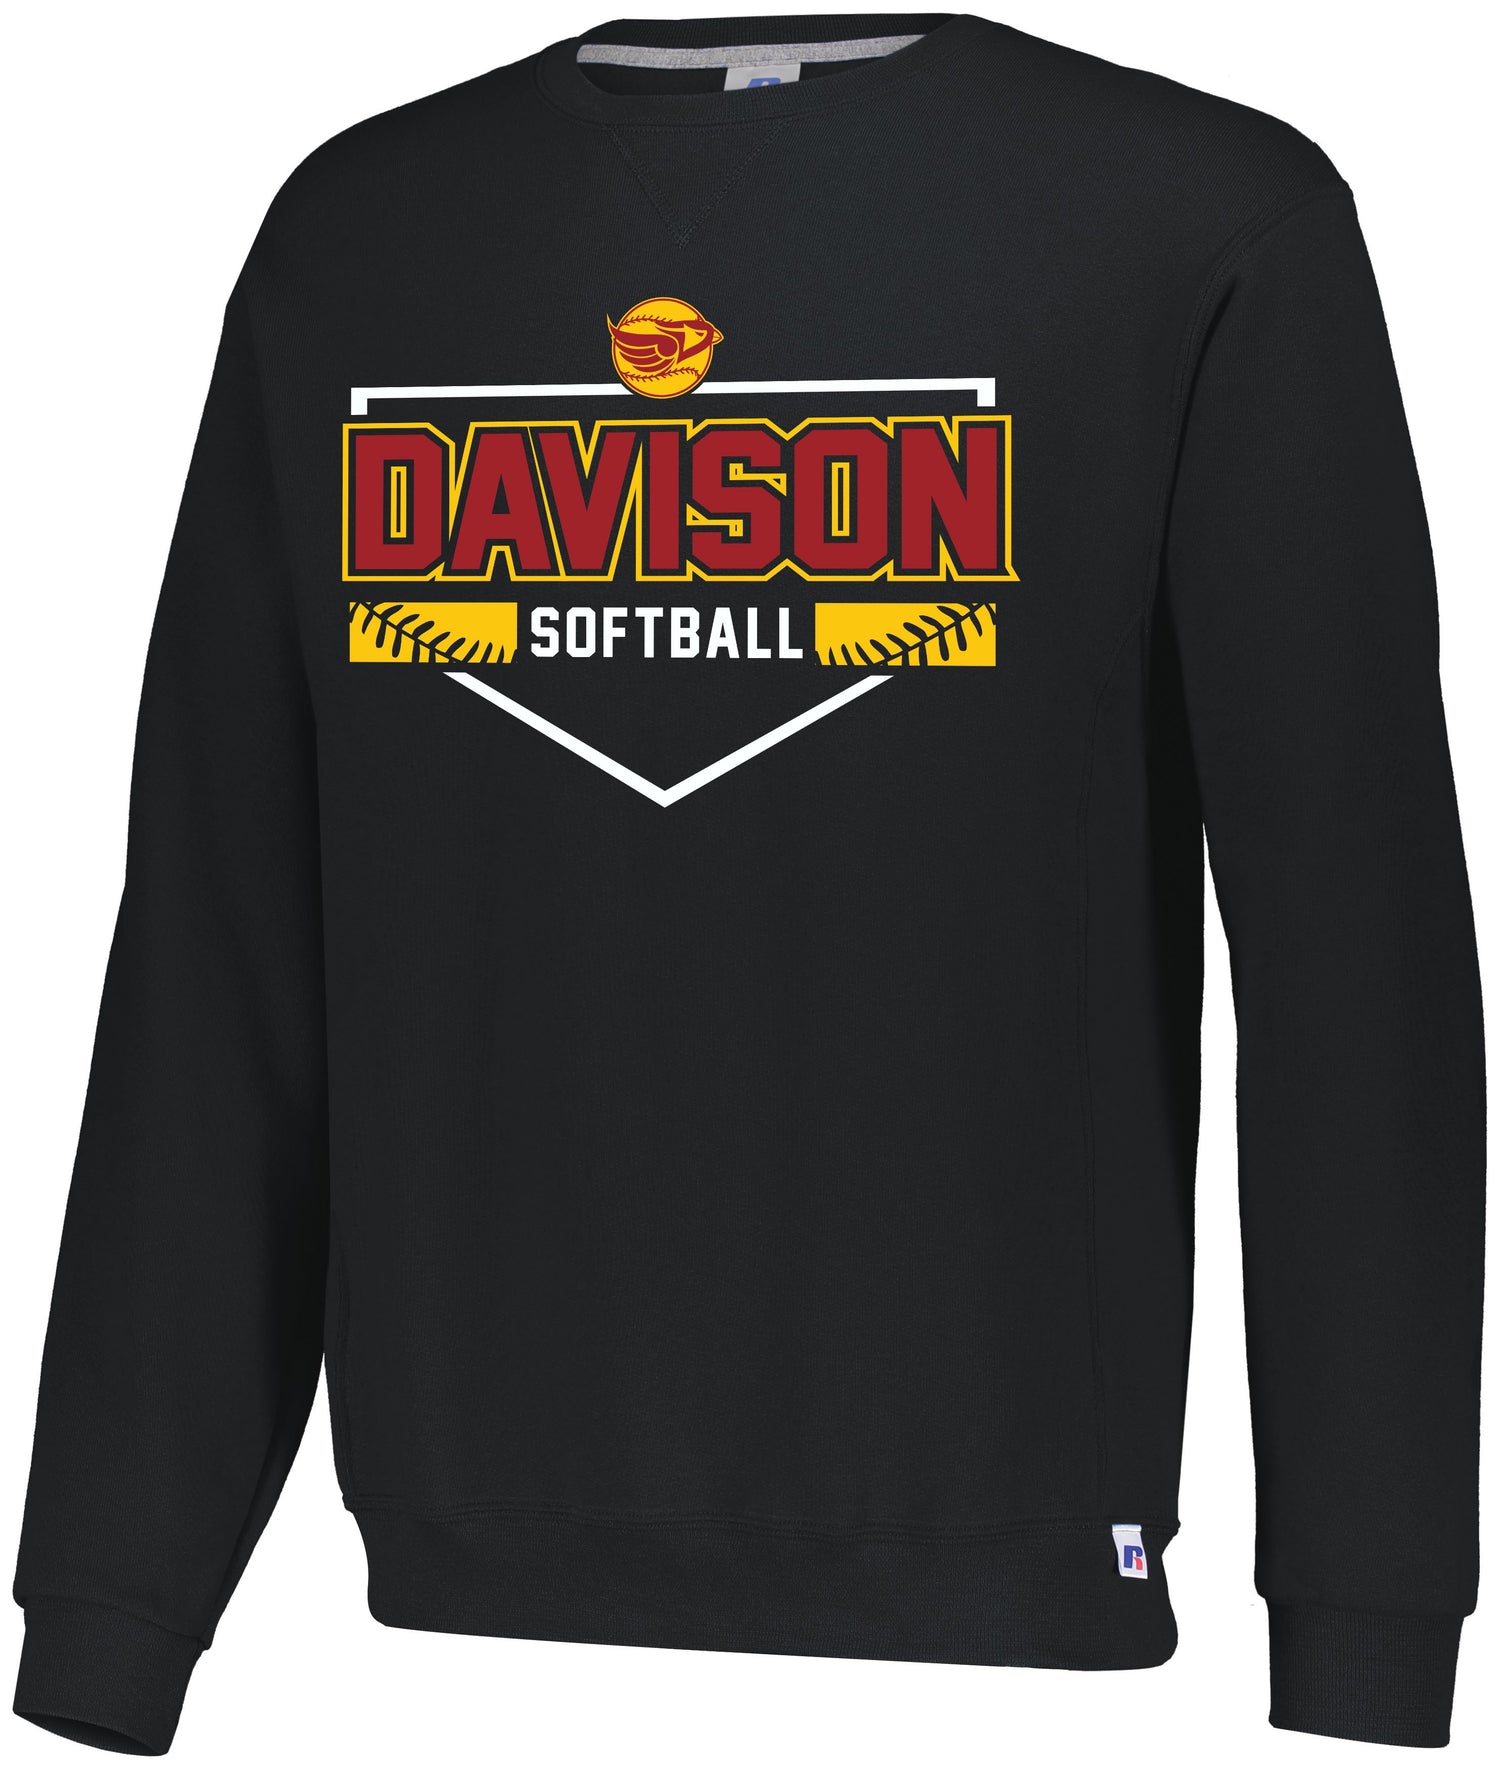 Davison Softball